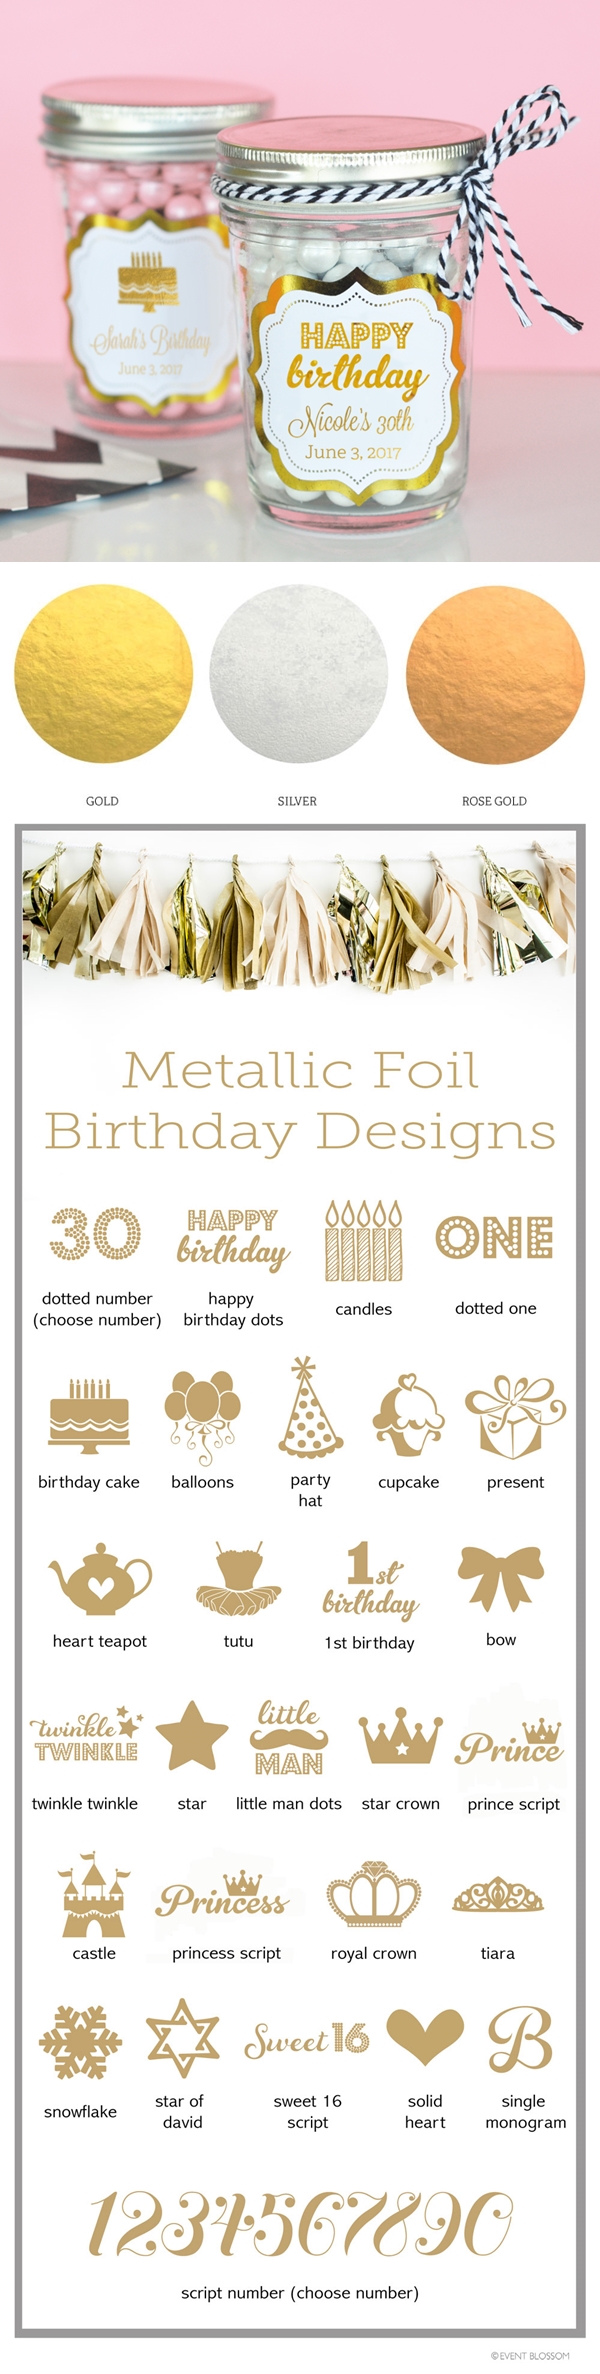 Event Blossom Personalized Metallic Foil Birthday Party Mini Mason Jar